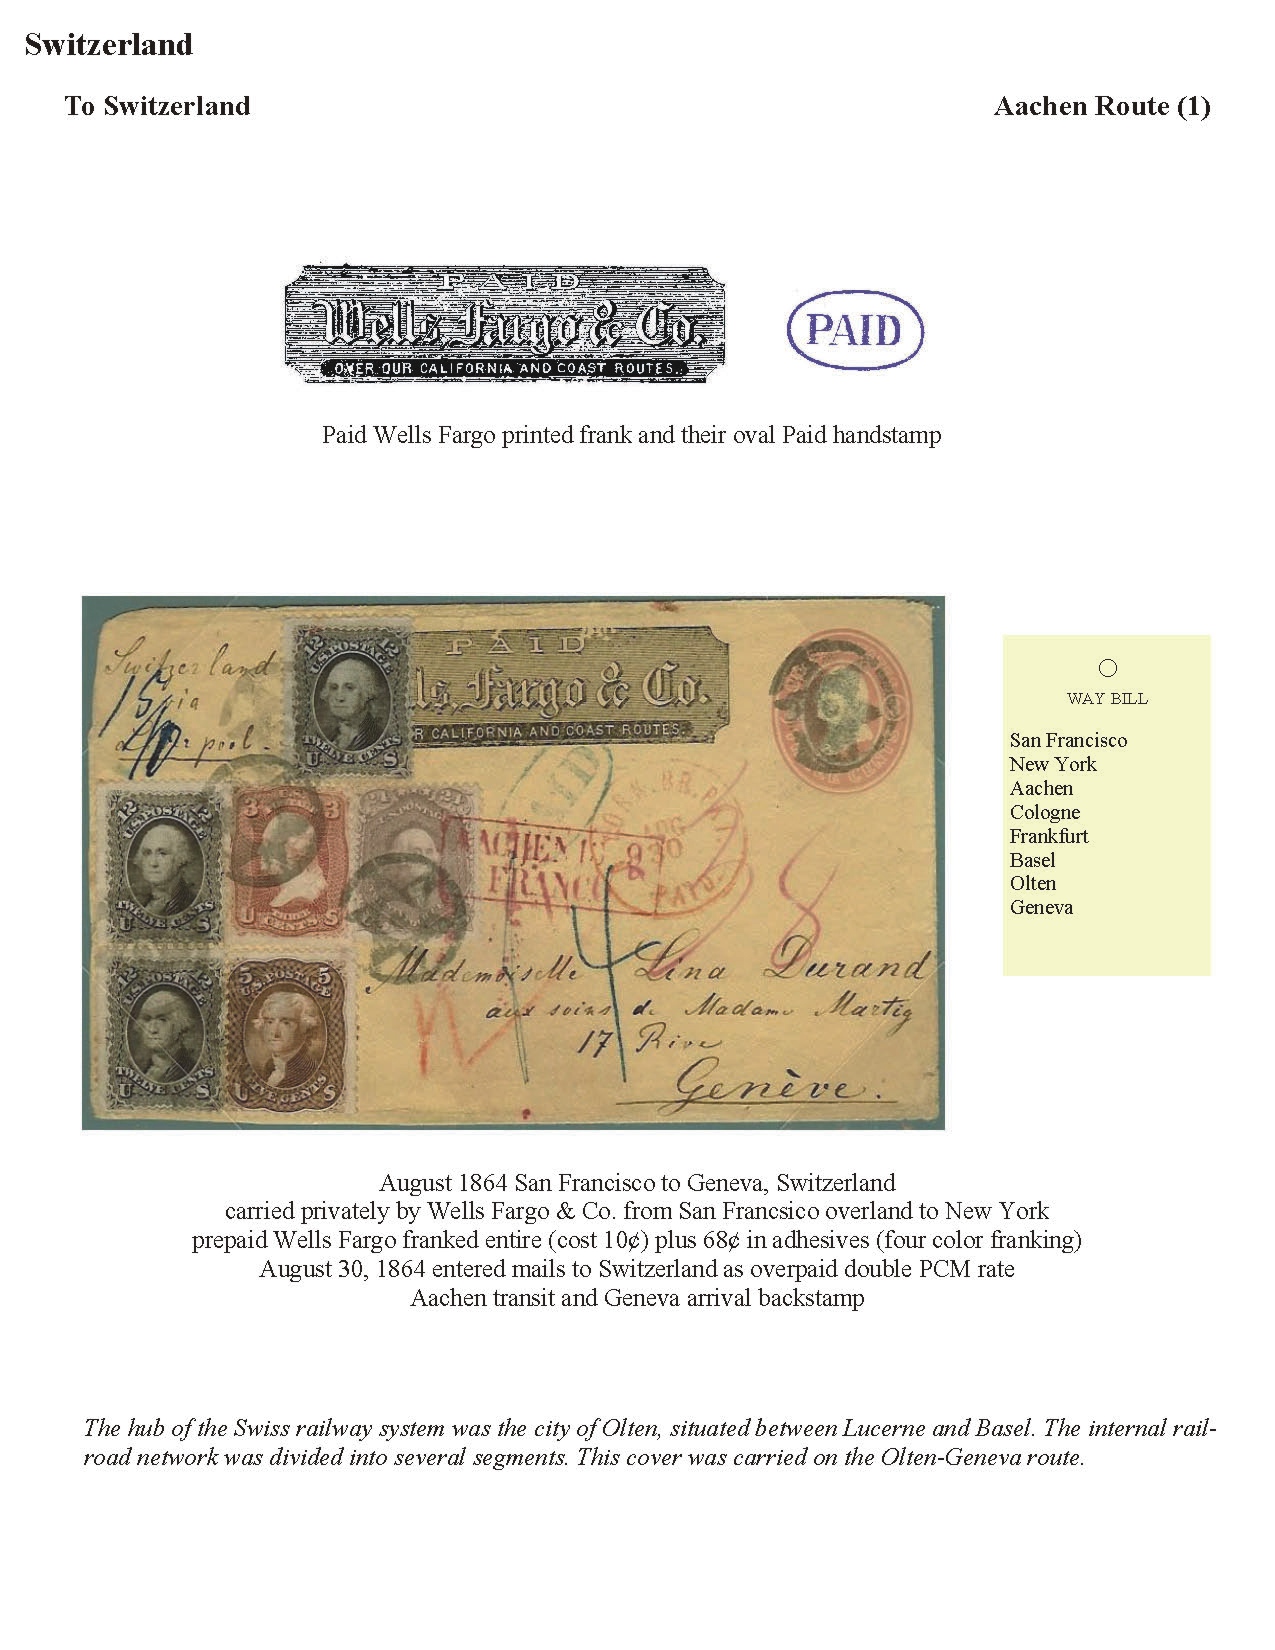 US External Mail Routes: 1854-1875